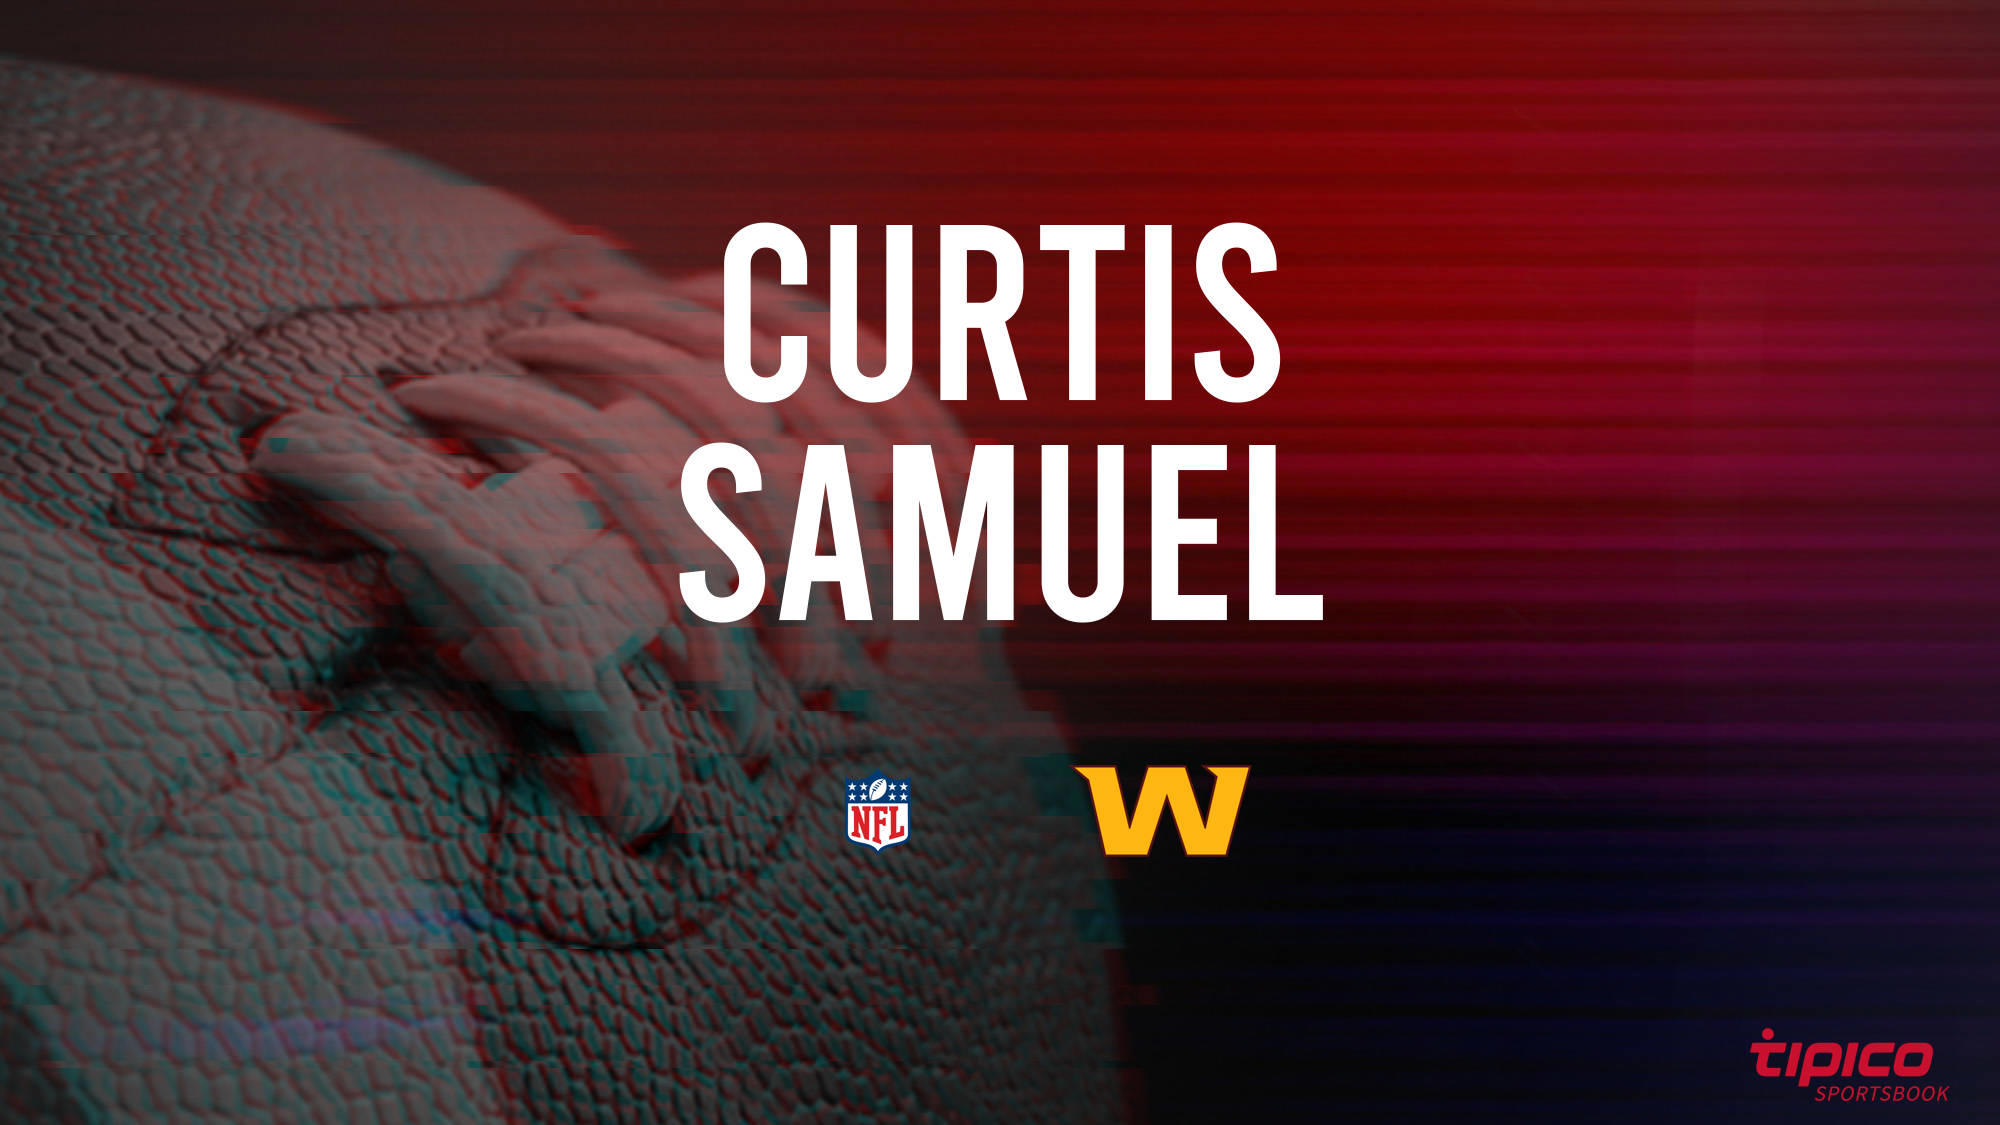 Curtis Samuel vs. Atlanta Falcons